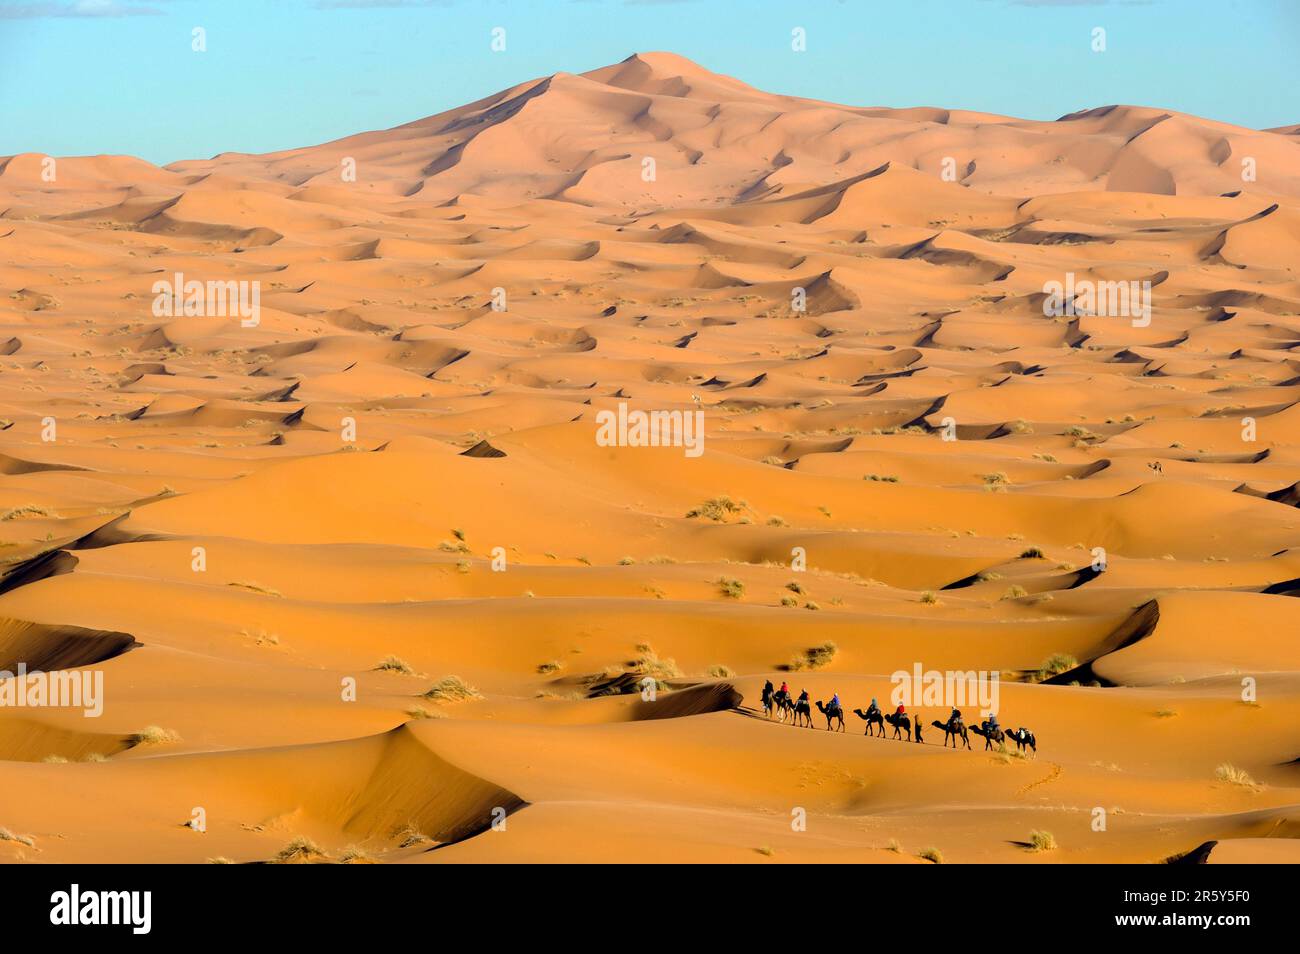 Morocco, camel driver, Berber, Erg Chebbi desert, dunes, caravan Stock Photo